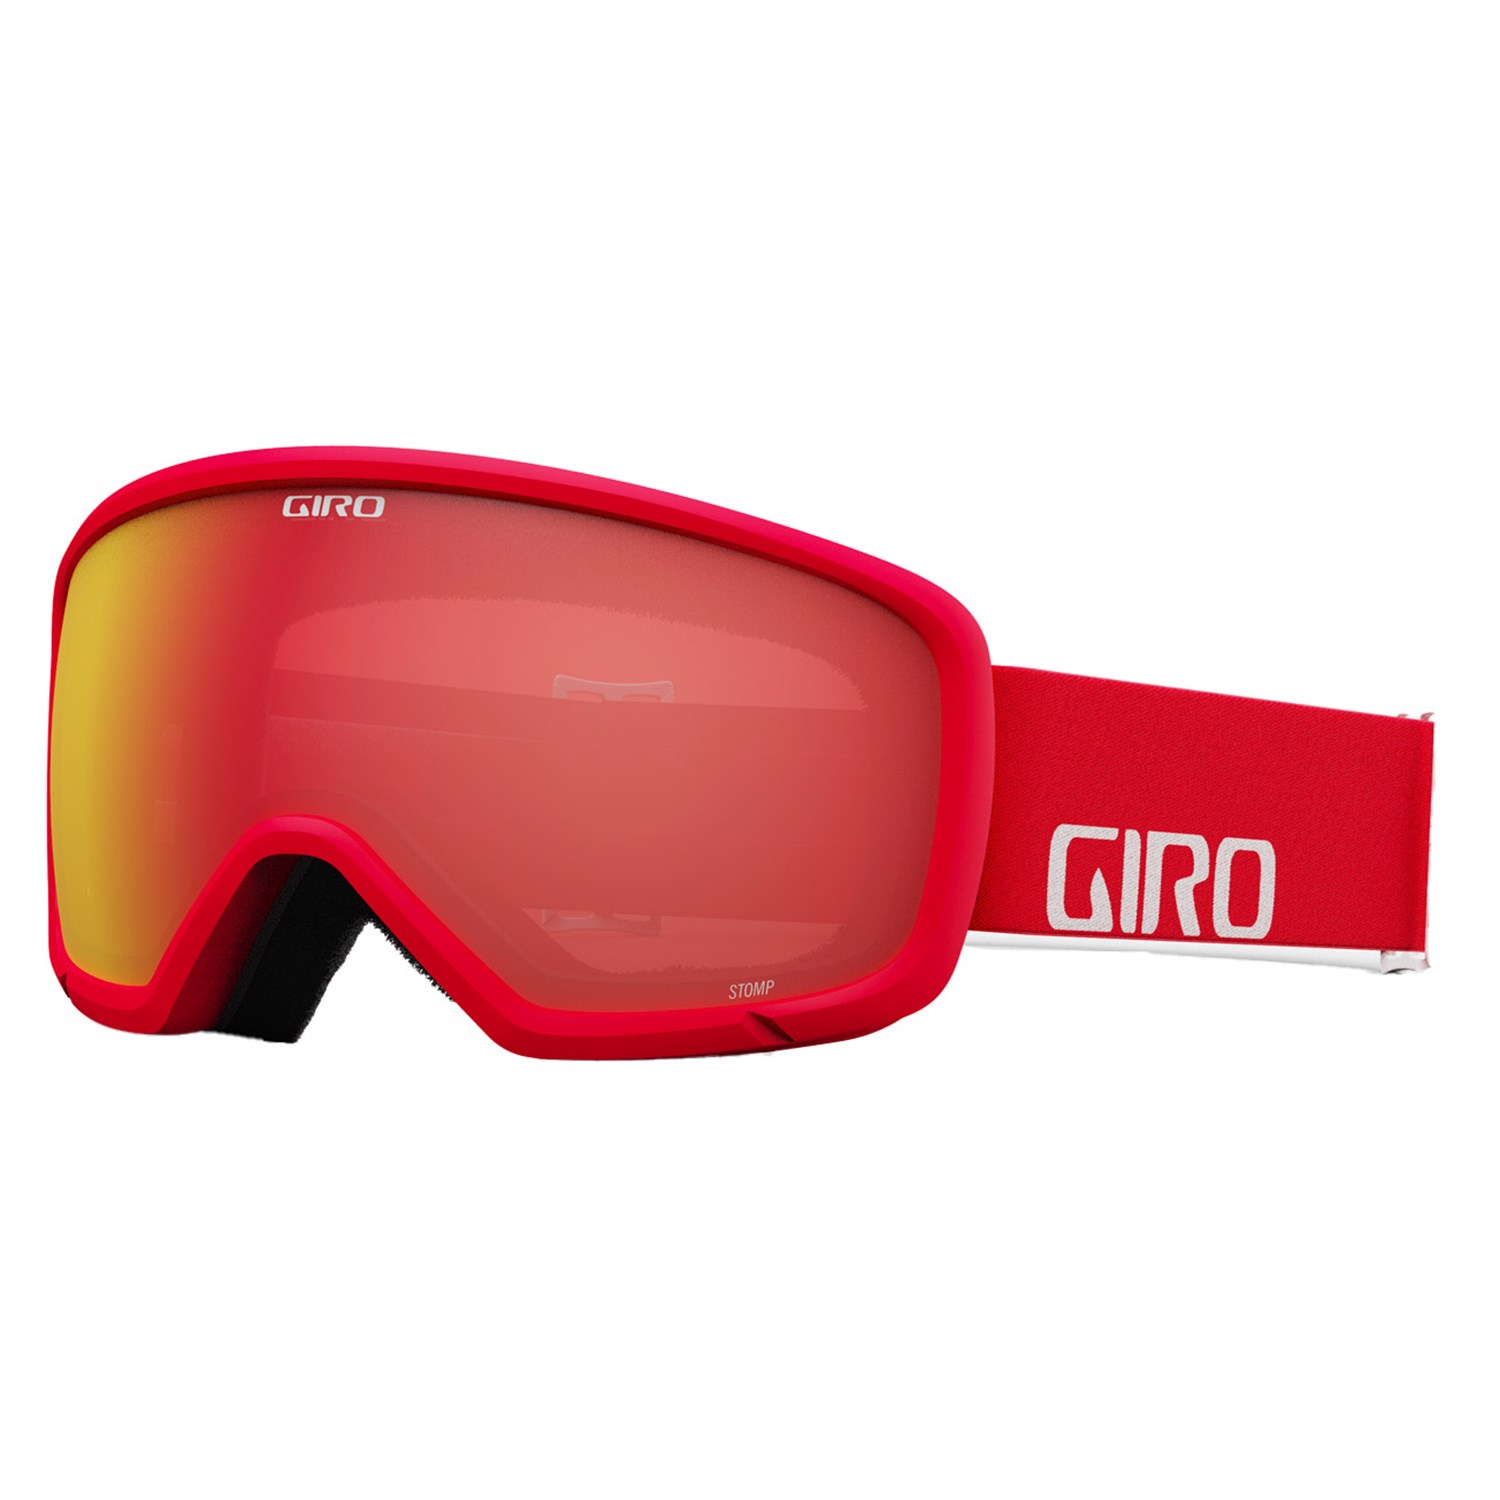 Очки Giro Stomp, цвет Red & White Wordmark/Amber Scarlet